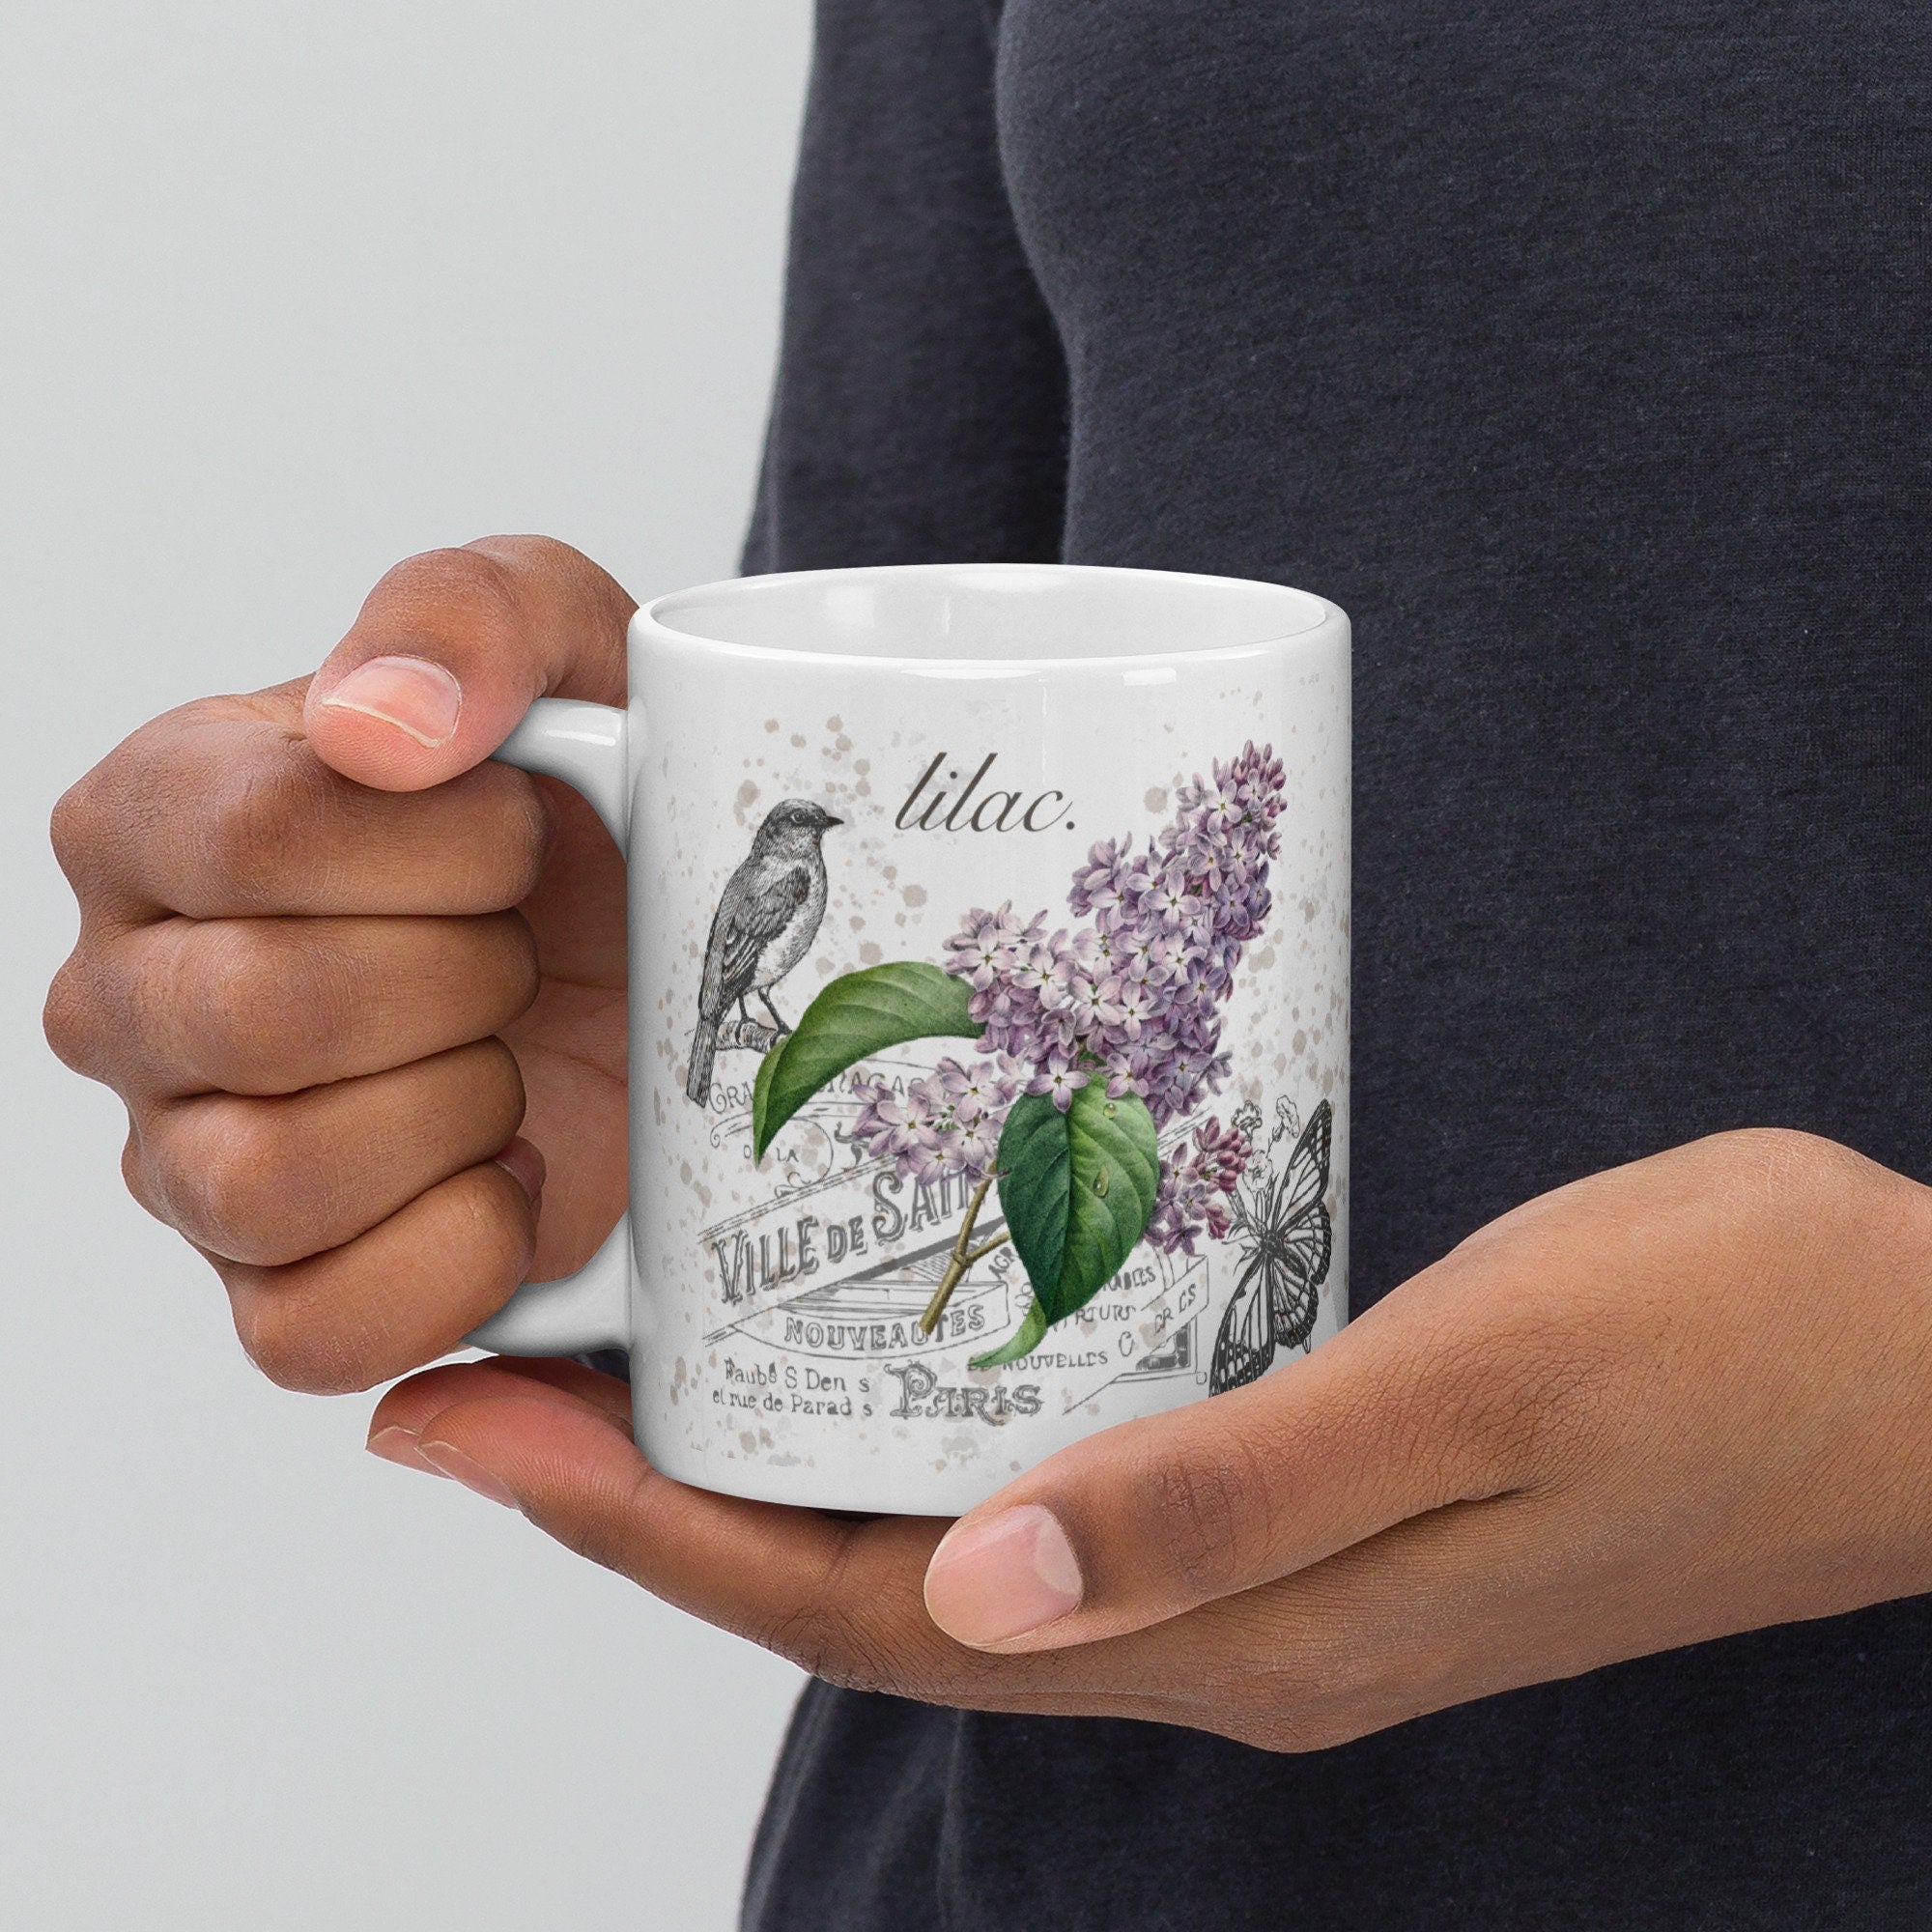 Vintage Botanical Lilac Illustration Garden Coffee Mug with Bird and Butterfly - Gardener Botanical Artist Coffee Lover Gift Floral Decor